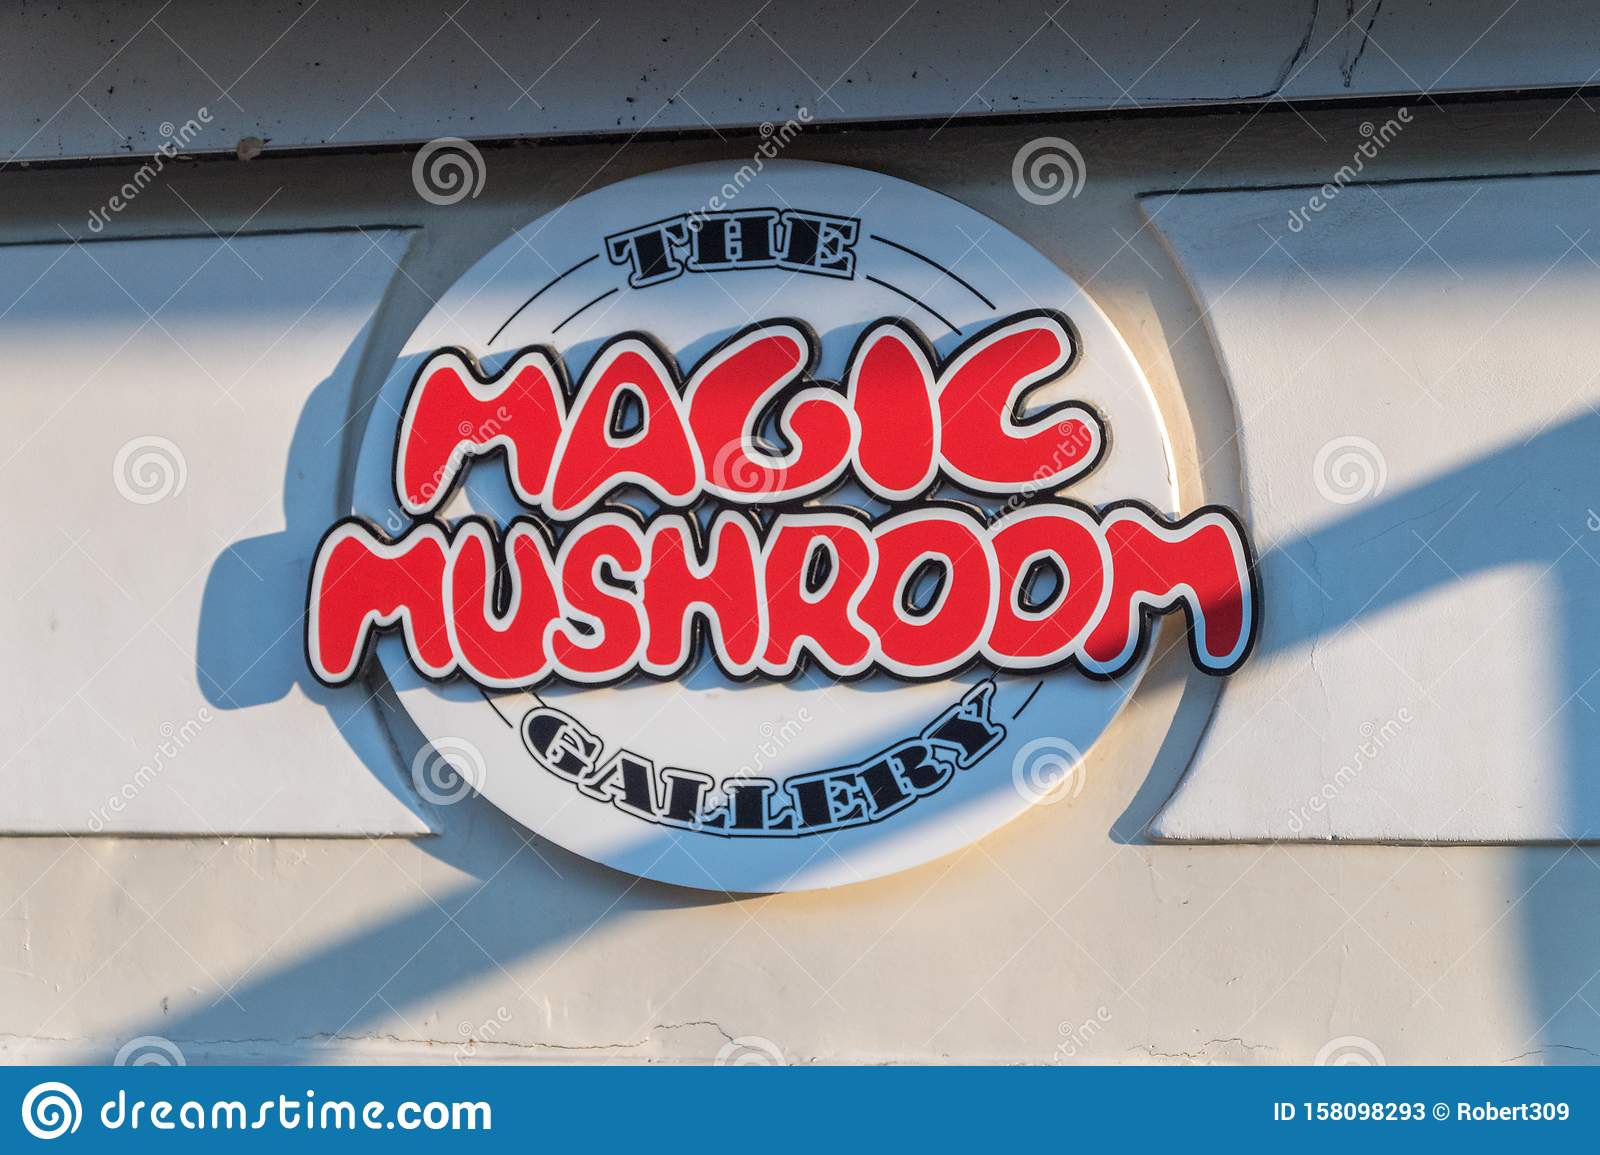 amsterdam-netherlands-june-magic-mushroom-gallery-logo-sign-store-mushrooms-herbal-xtc-psychoactive-herbs-158098293